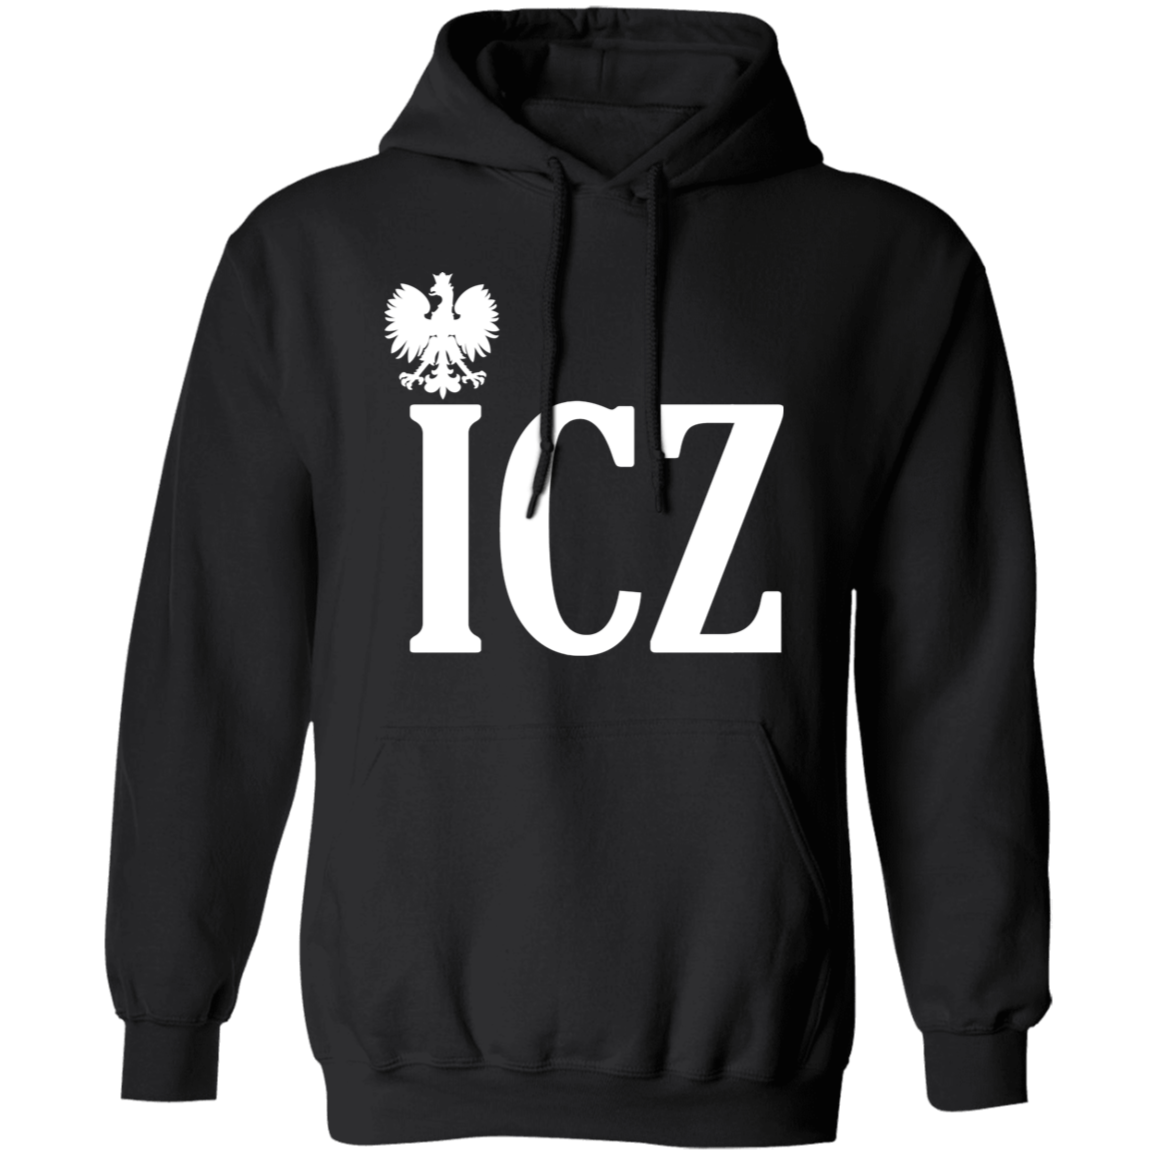 ICZ Polish Surname Ending Apparel CustomCat G185 Pullover Hoodie Black S